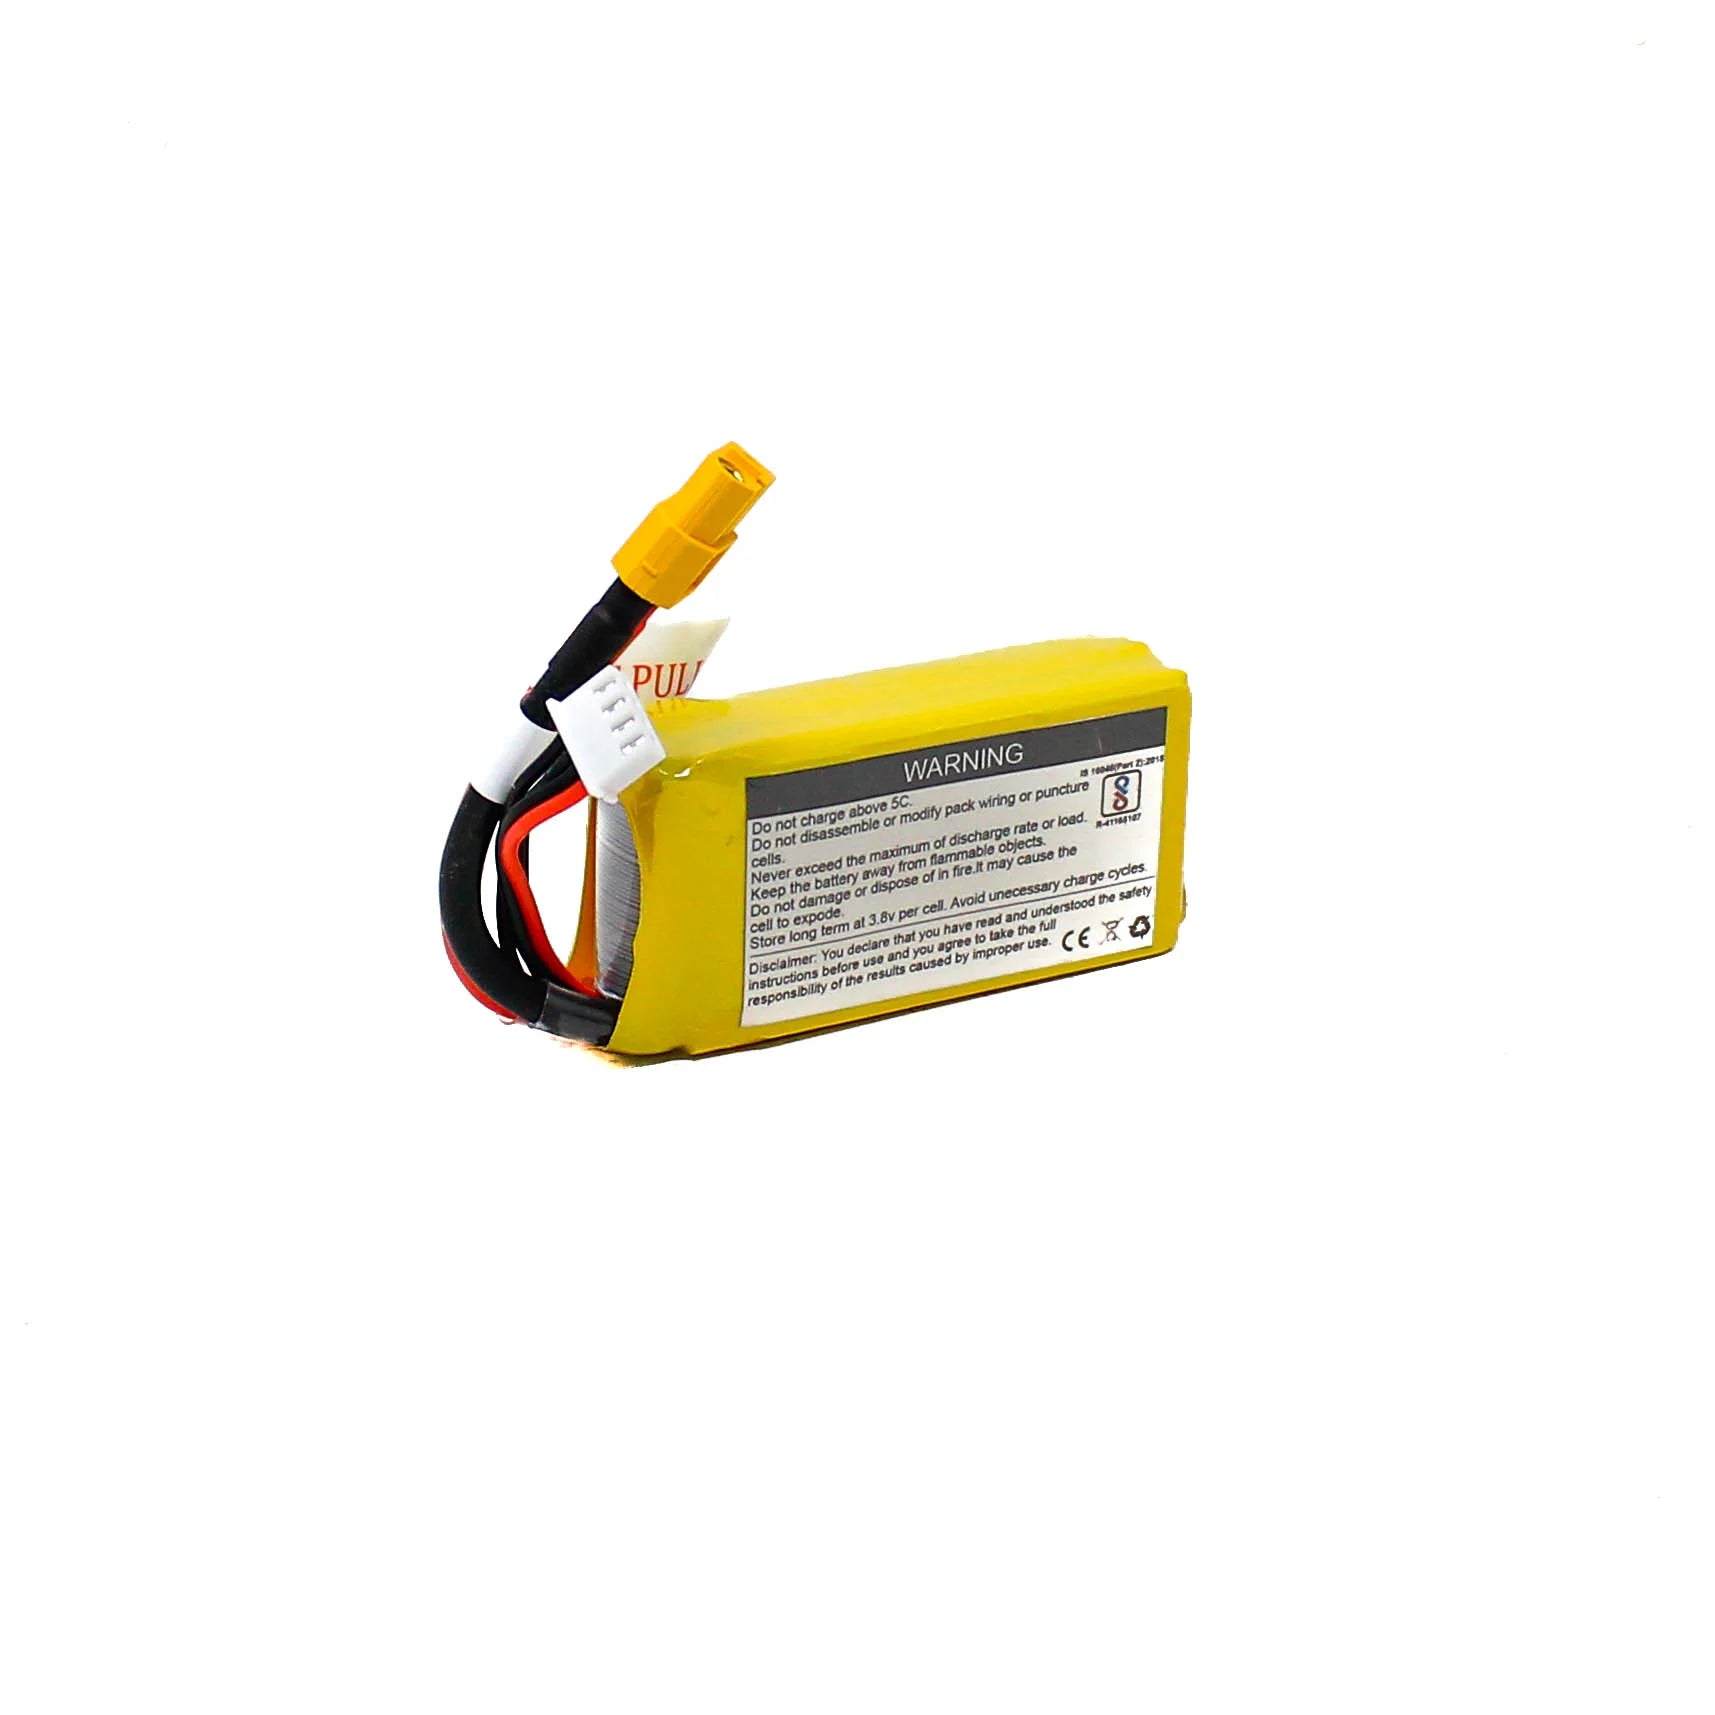 Lemon LIPO 1300mAh 3S 45C/90C Lithium Polymer Battery Pack